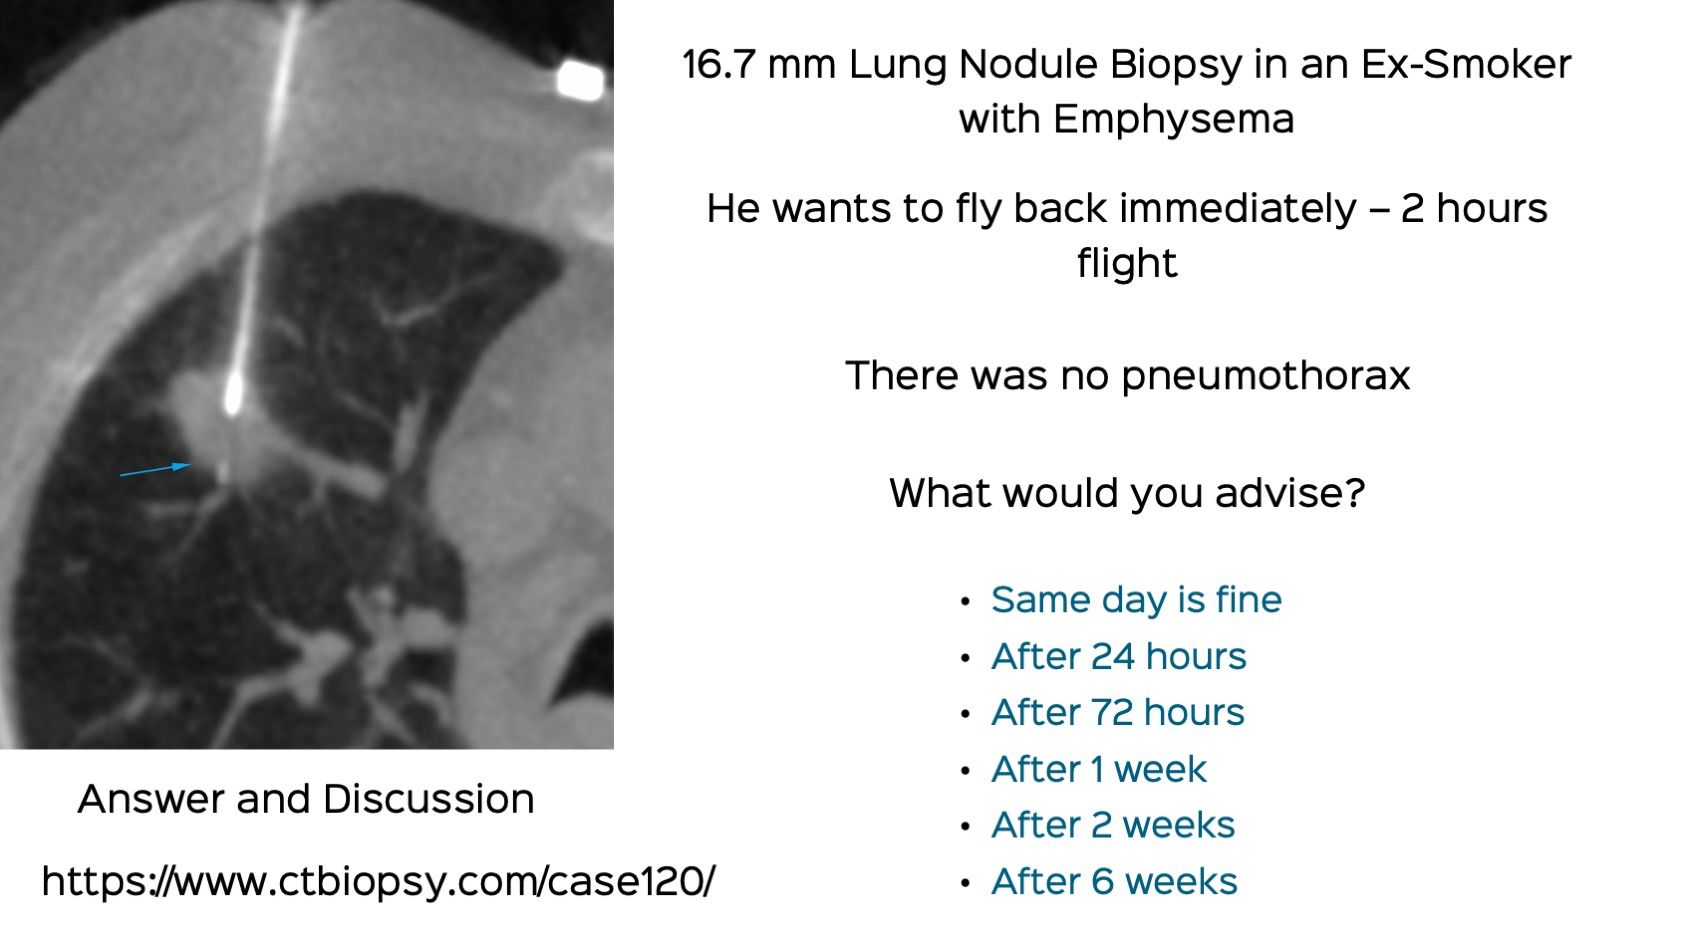 Case 120: Right Upper Lobe Lung Nodule Biopsy - Patient Wants to Fly Back Immediately